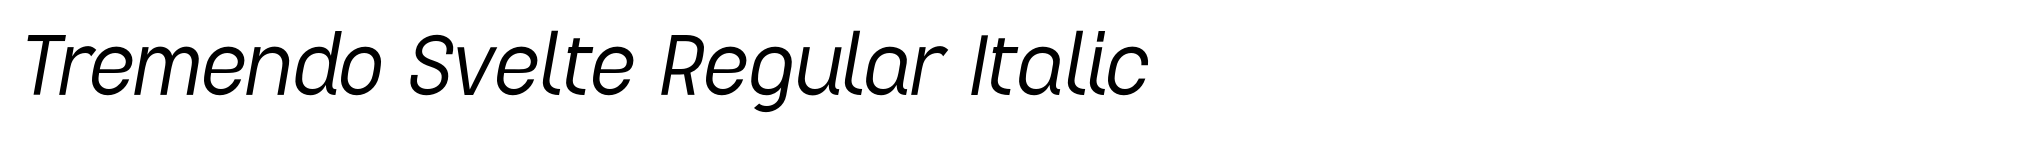 Tremendo Svelte Regular Italic image